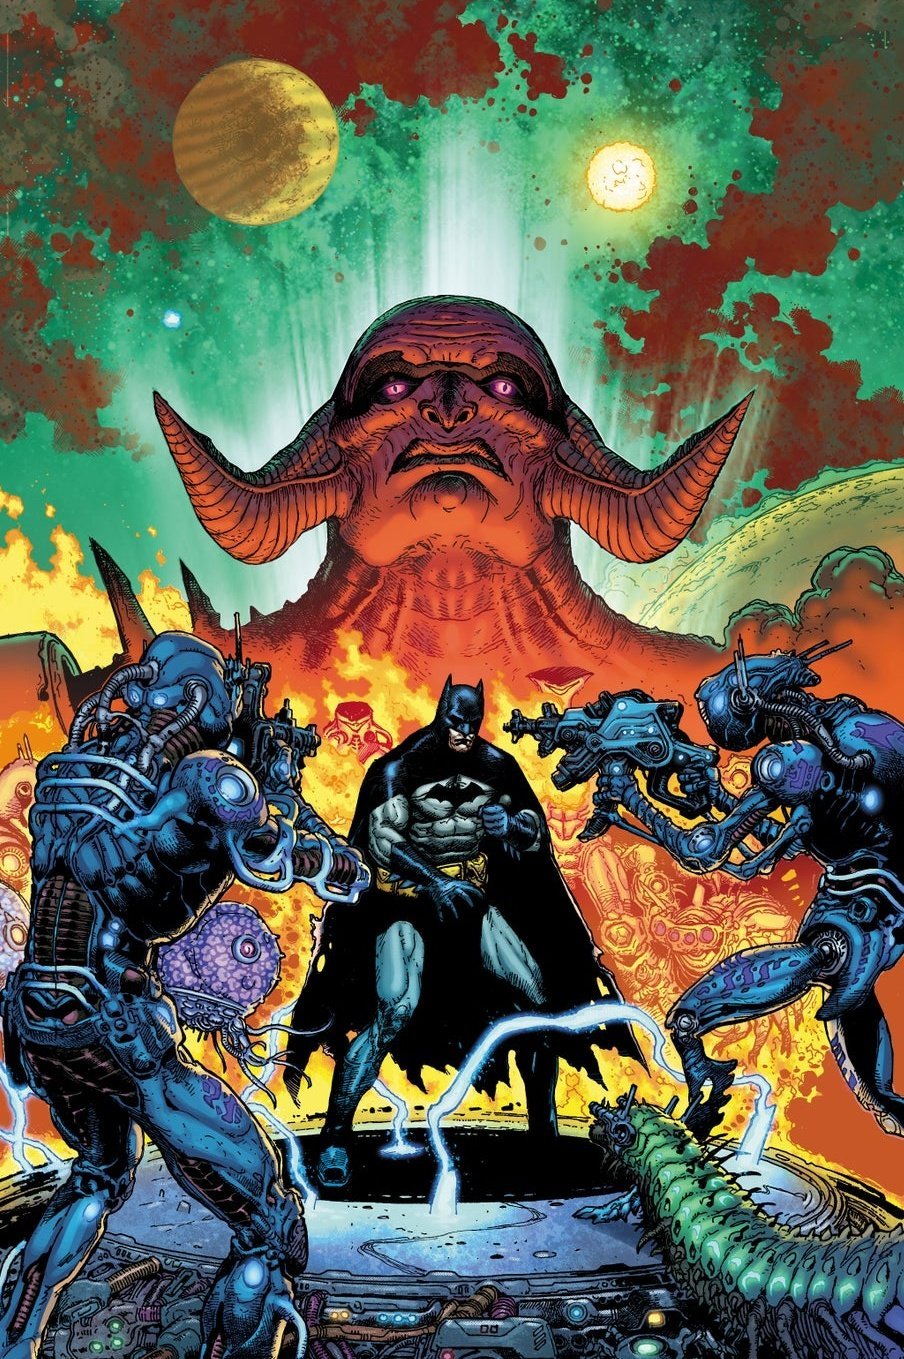 Cover di Doug Mahnke di Batman: Off-World 1 di Jason Aaron